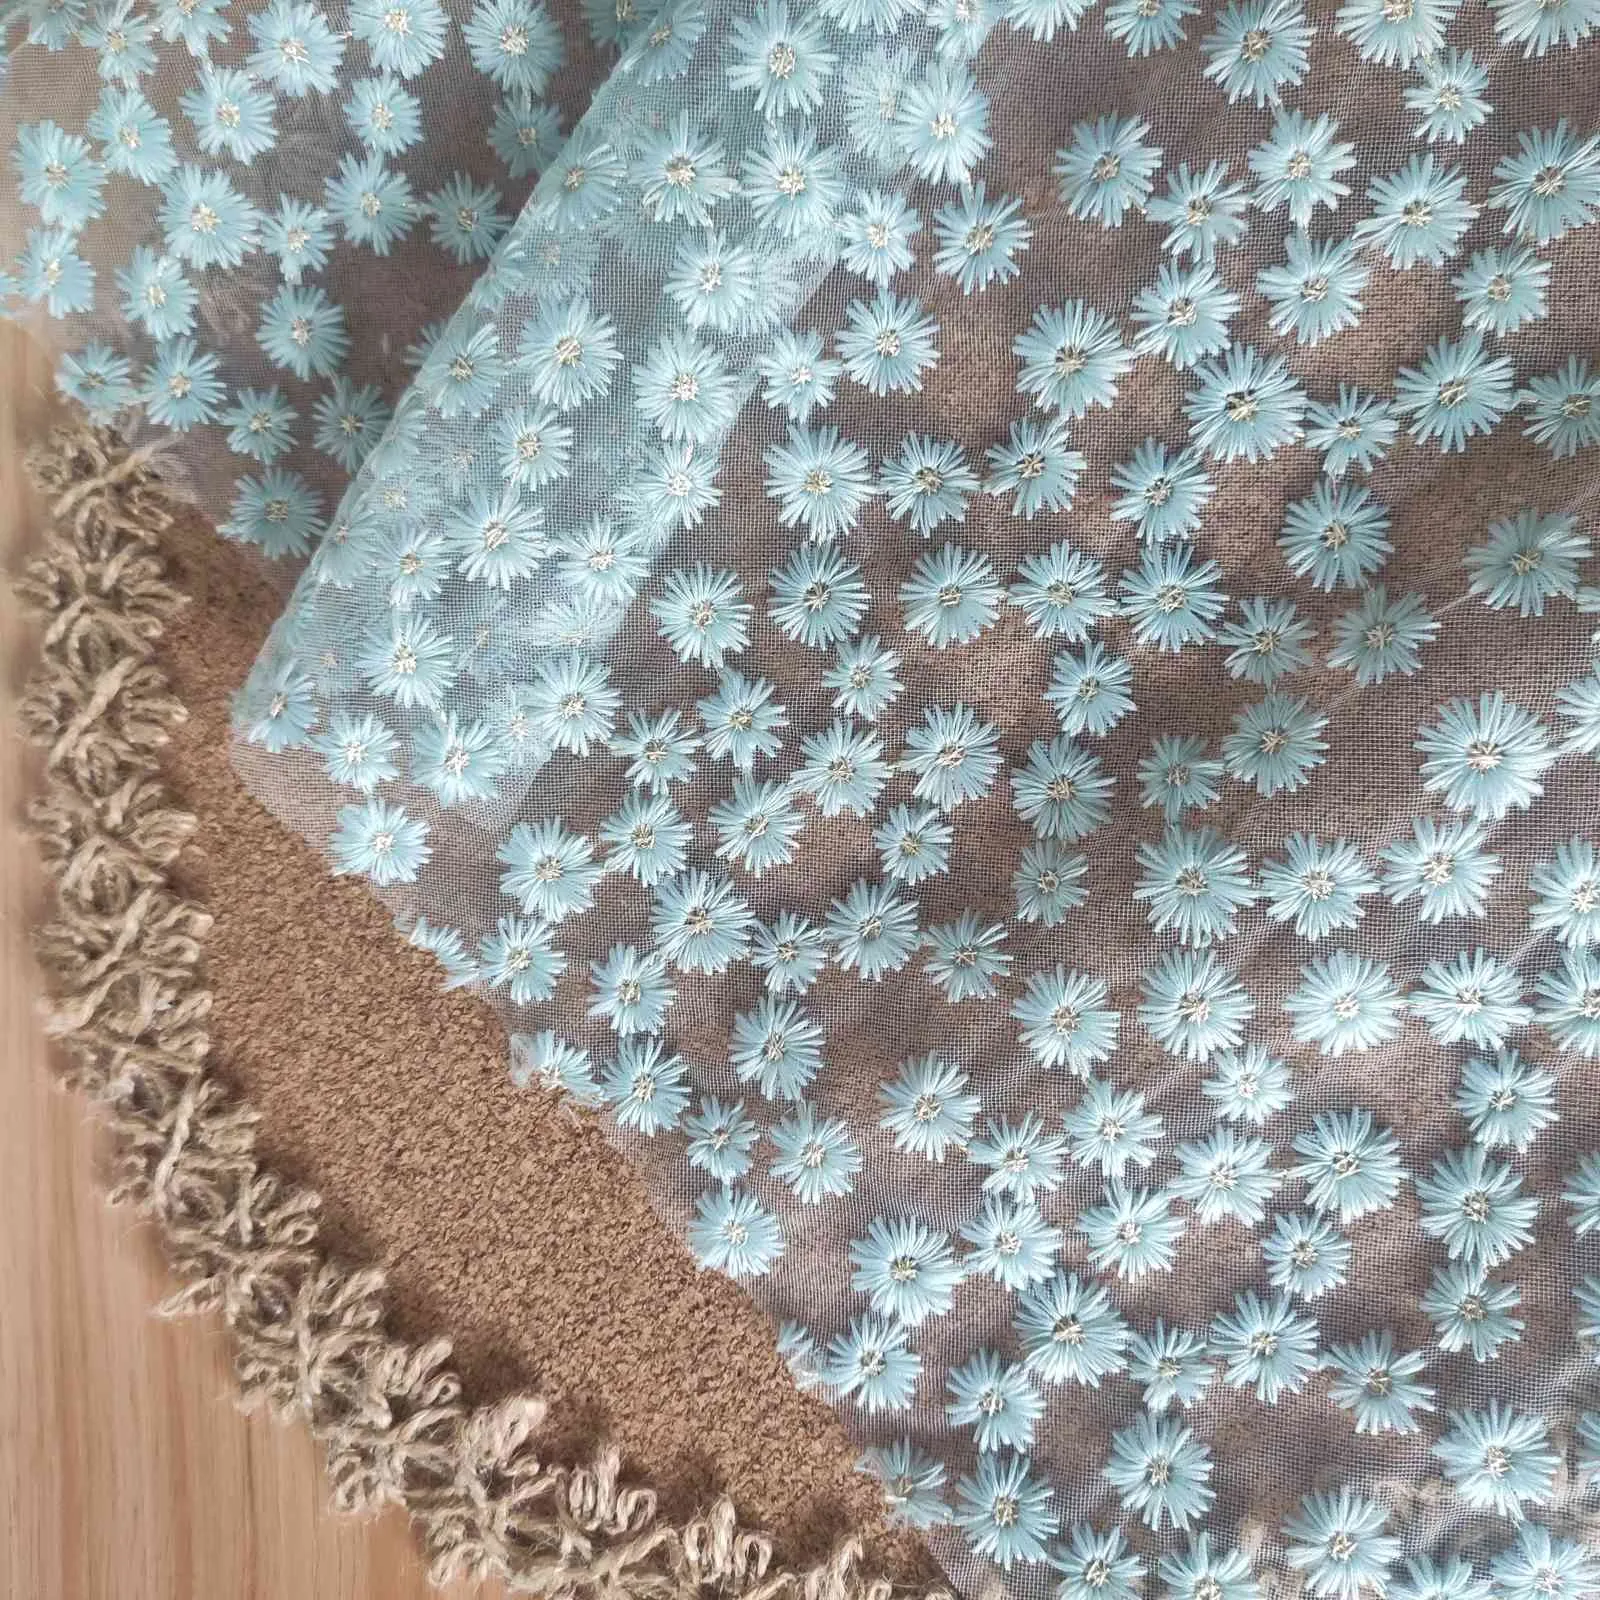 Nieuwe hoge kwaliteit blauwe madeliefje mesh borduurwerk kant stof sluier rok venster scherm achtergrondmateriaal